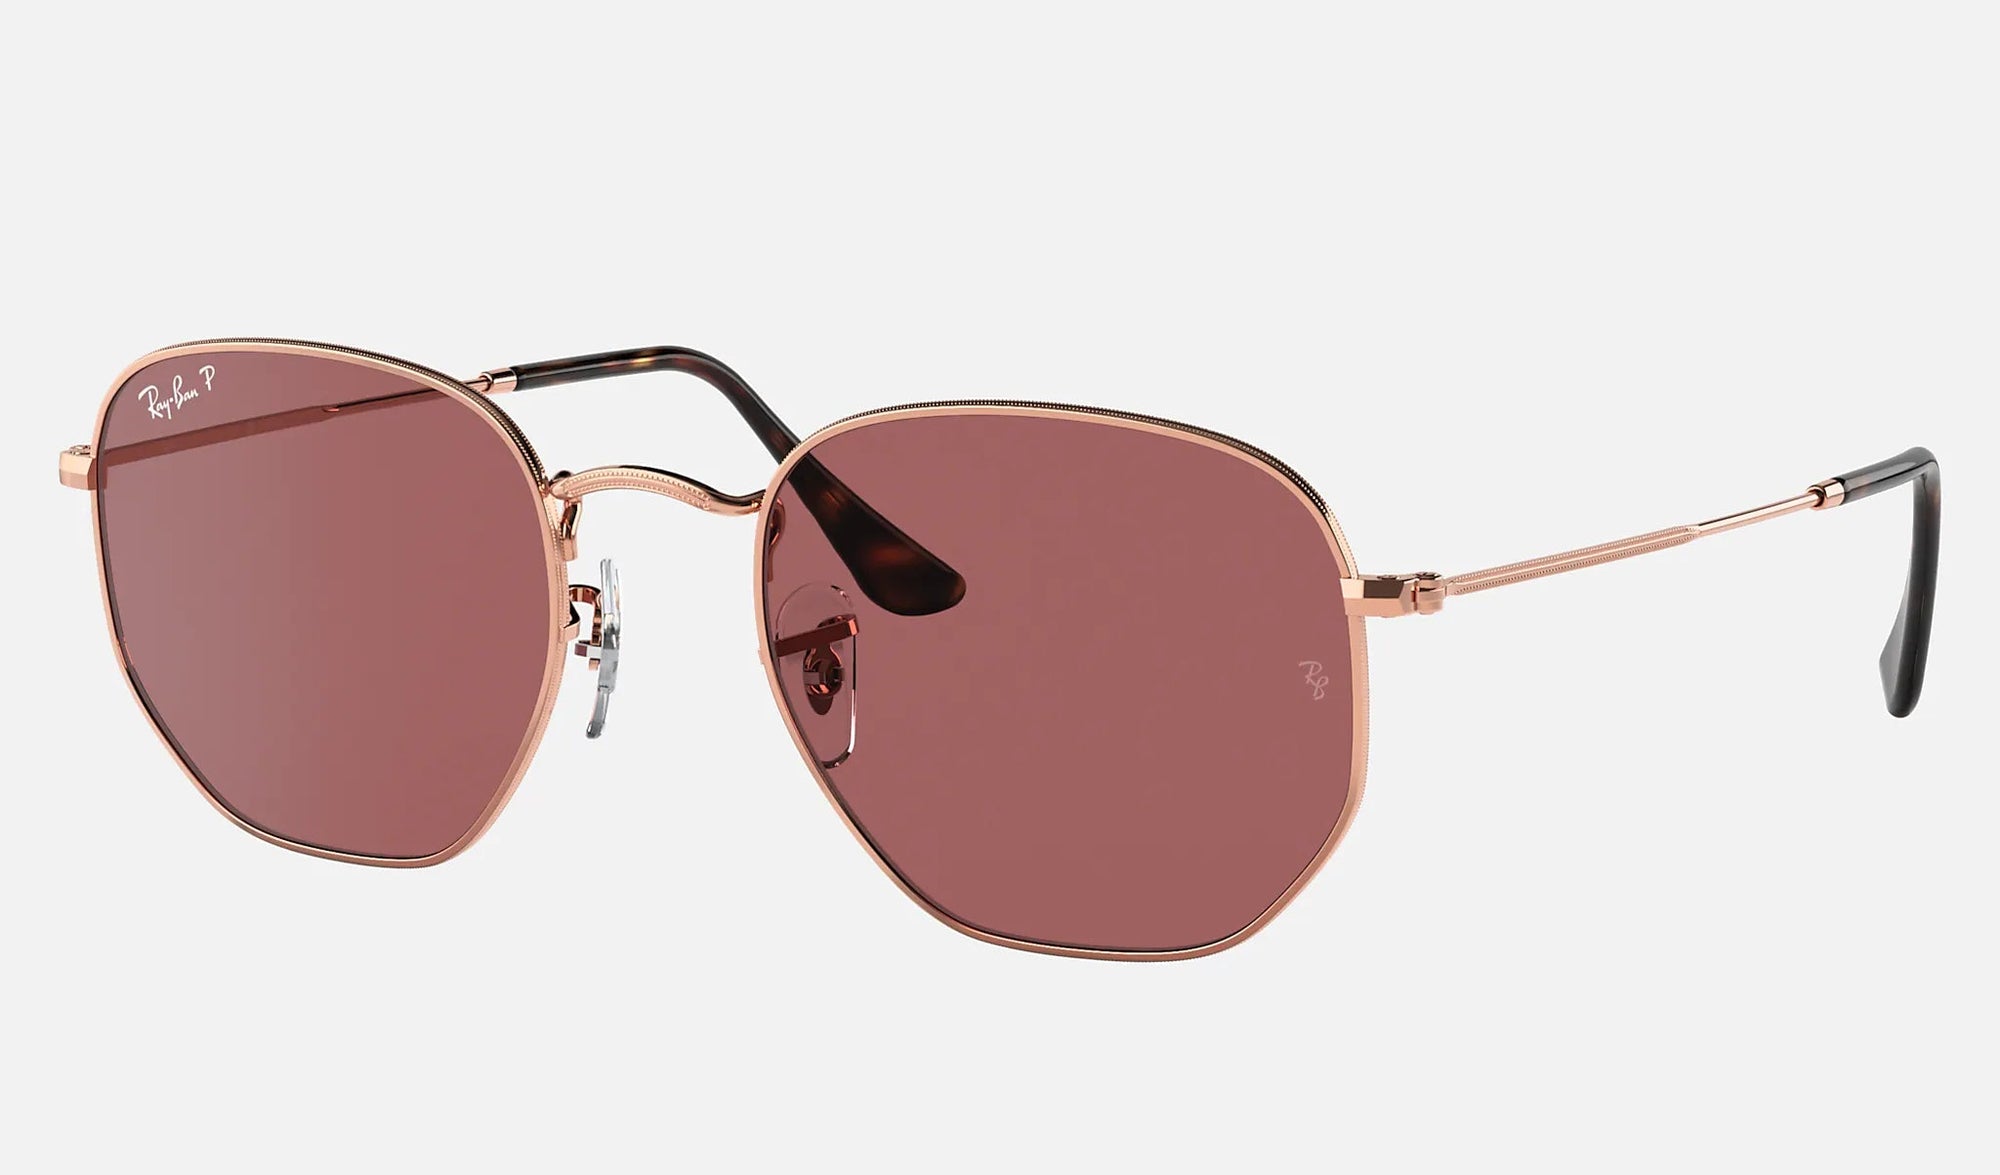 RAY-BAN Hexagonal Flat Lenses Rose Gold - Violet Classic Polarized Sunglasses Sunglasses Ray-Ban 